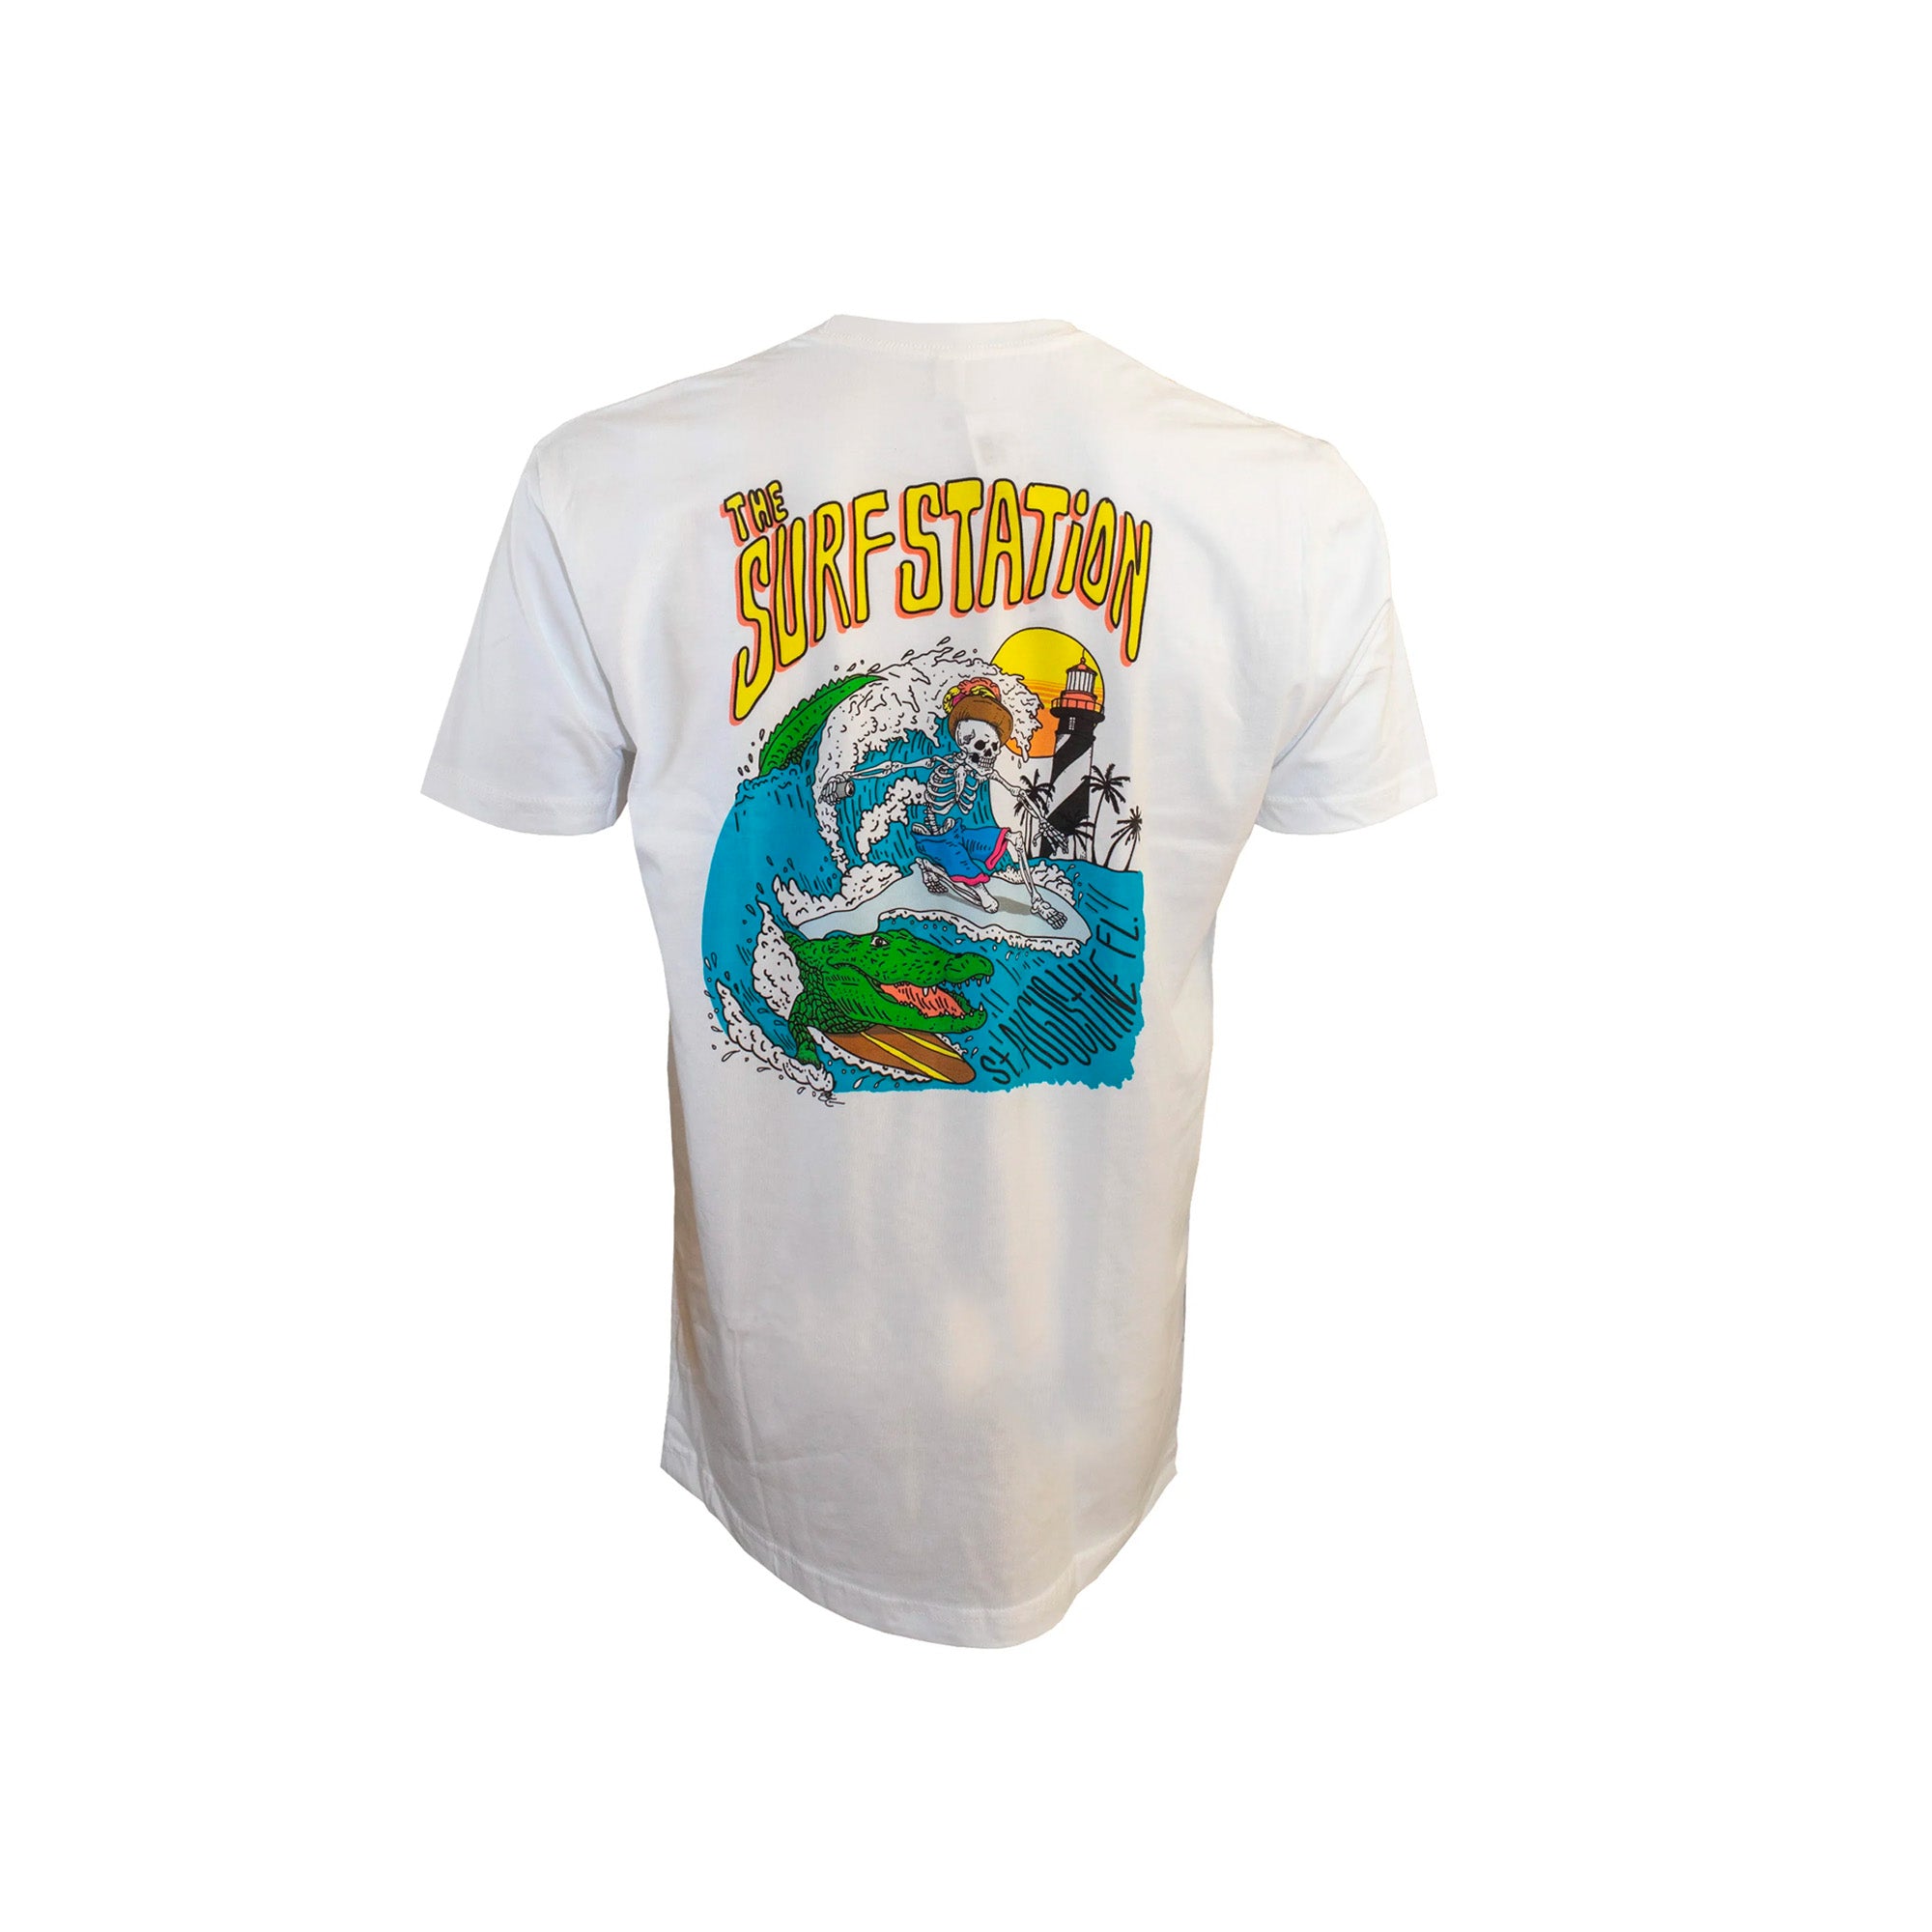 Surf Station x Edward Jiminez Skeleton Gator Youth Boy's S/S T-Shirt